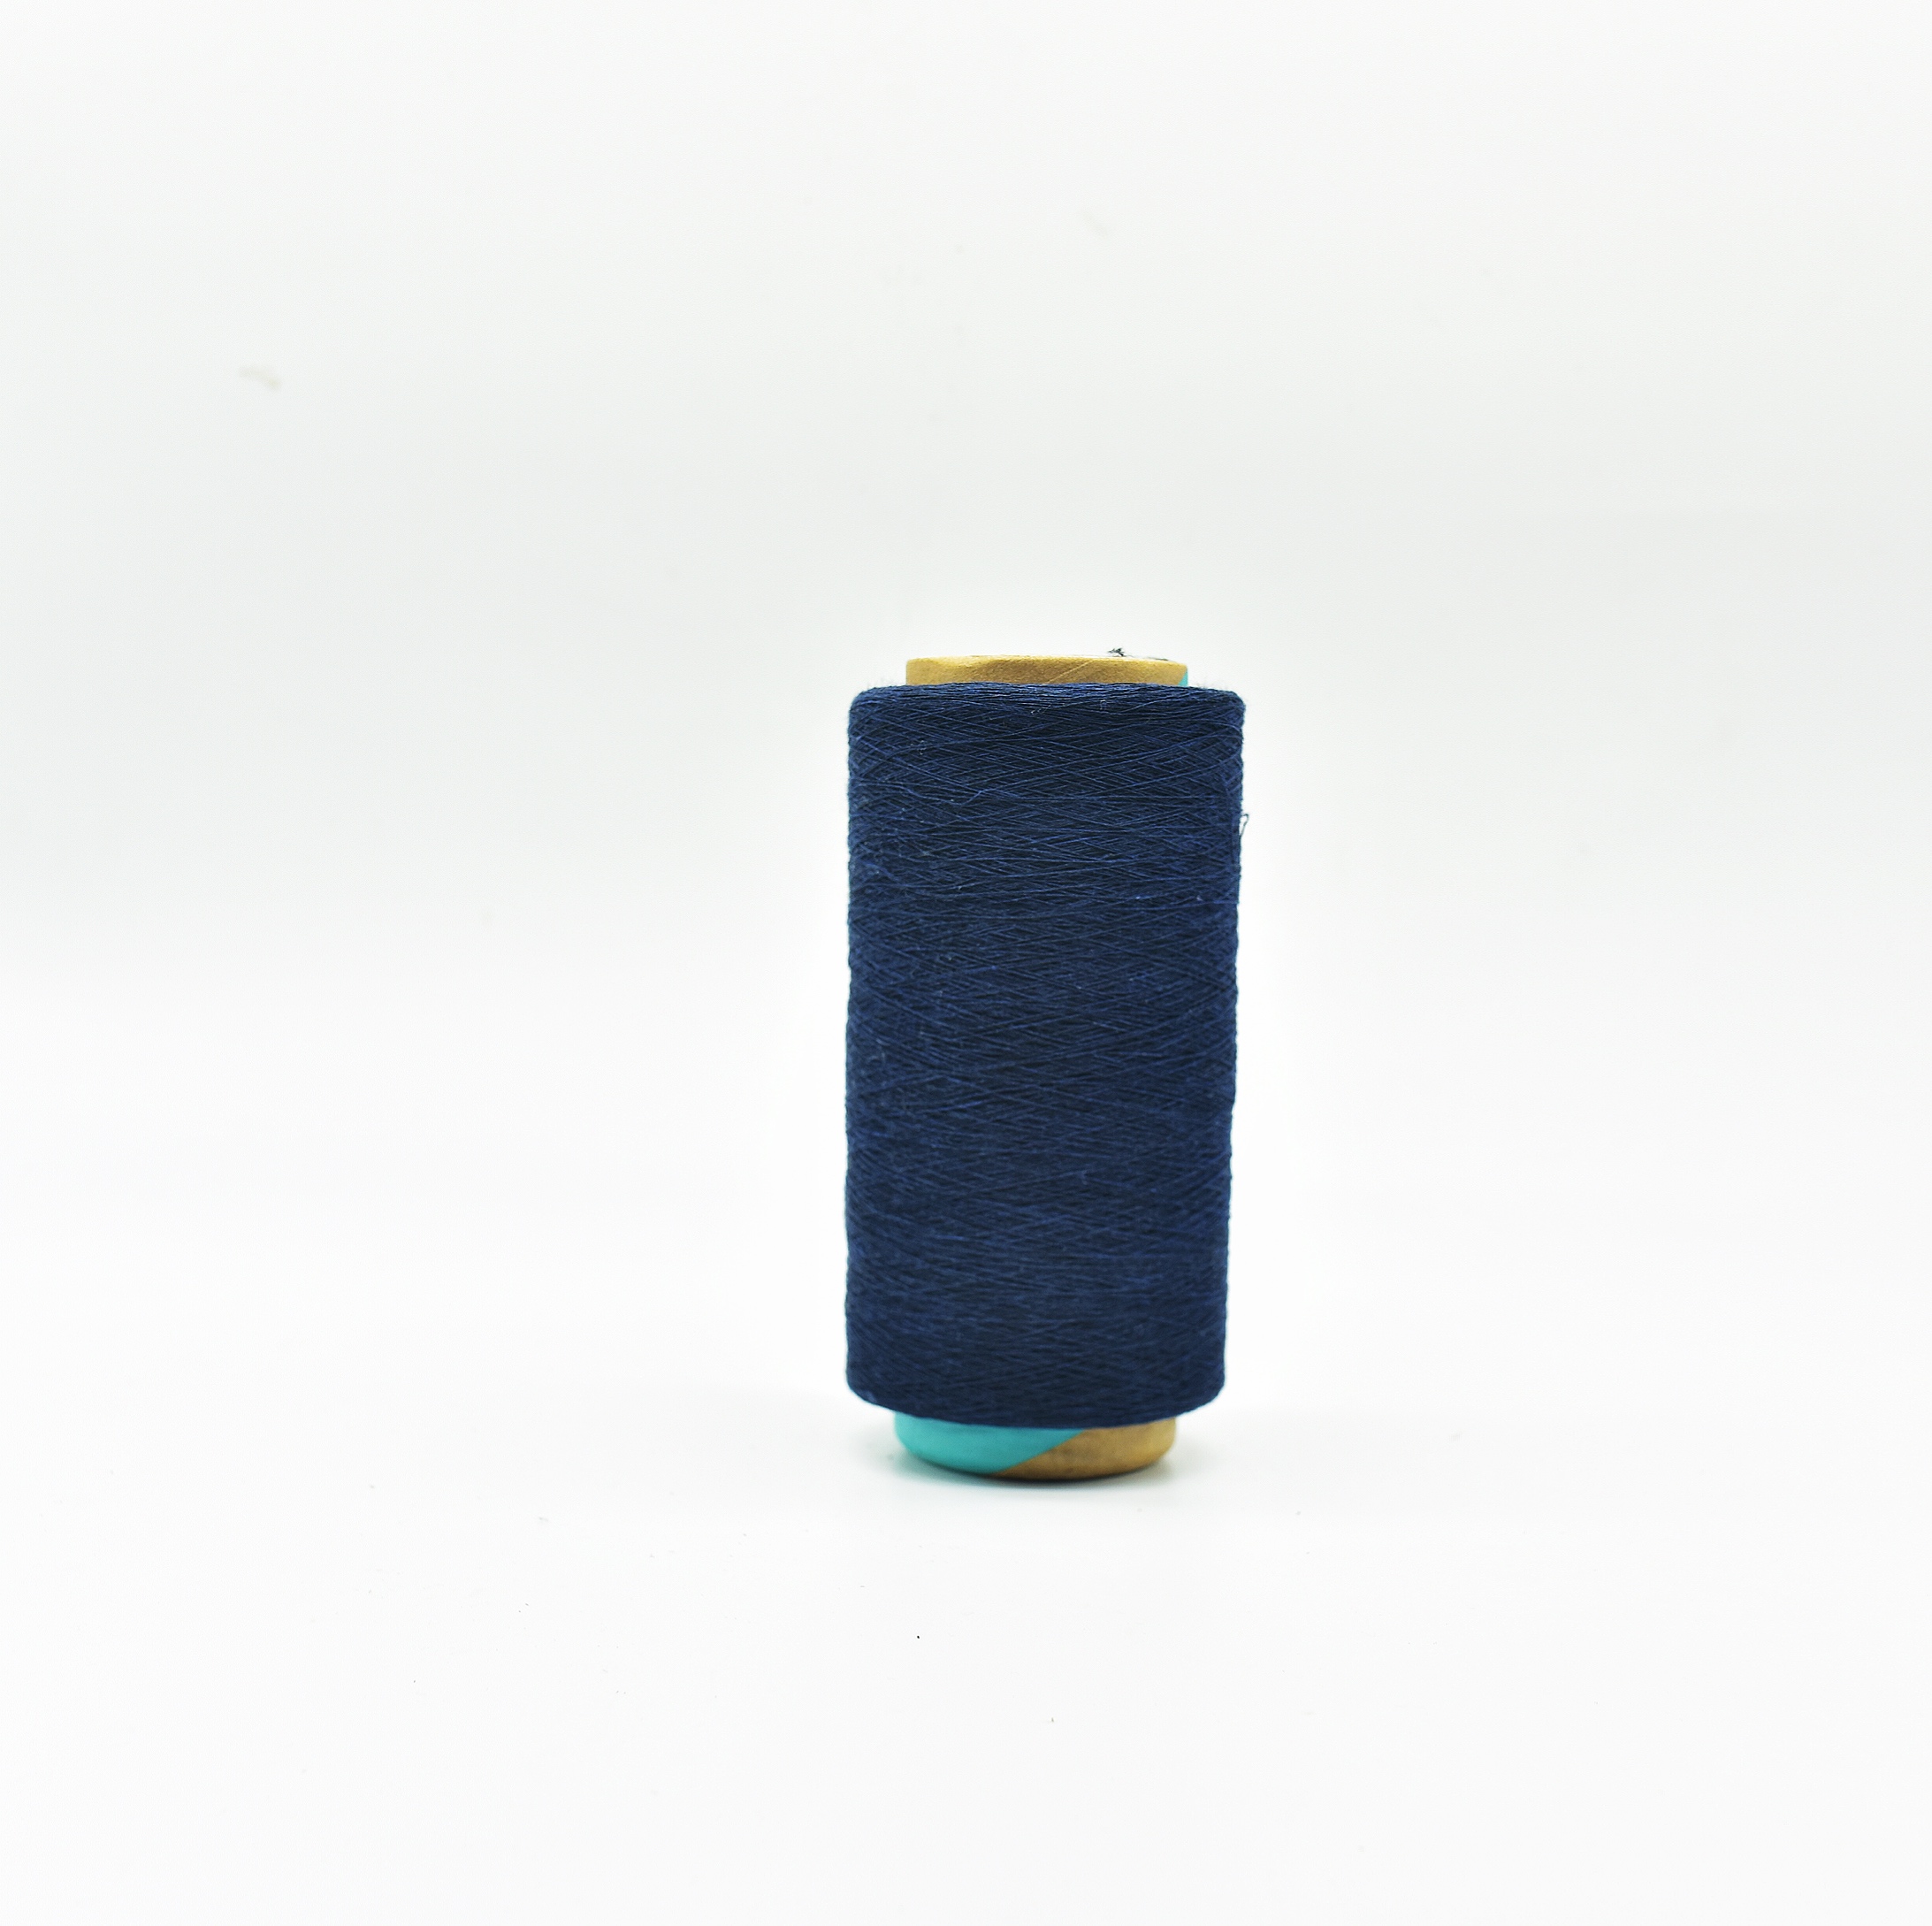 NE 12S Navy blue recycled cotton yarn for knitting socks 